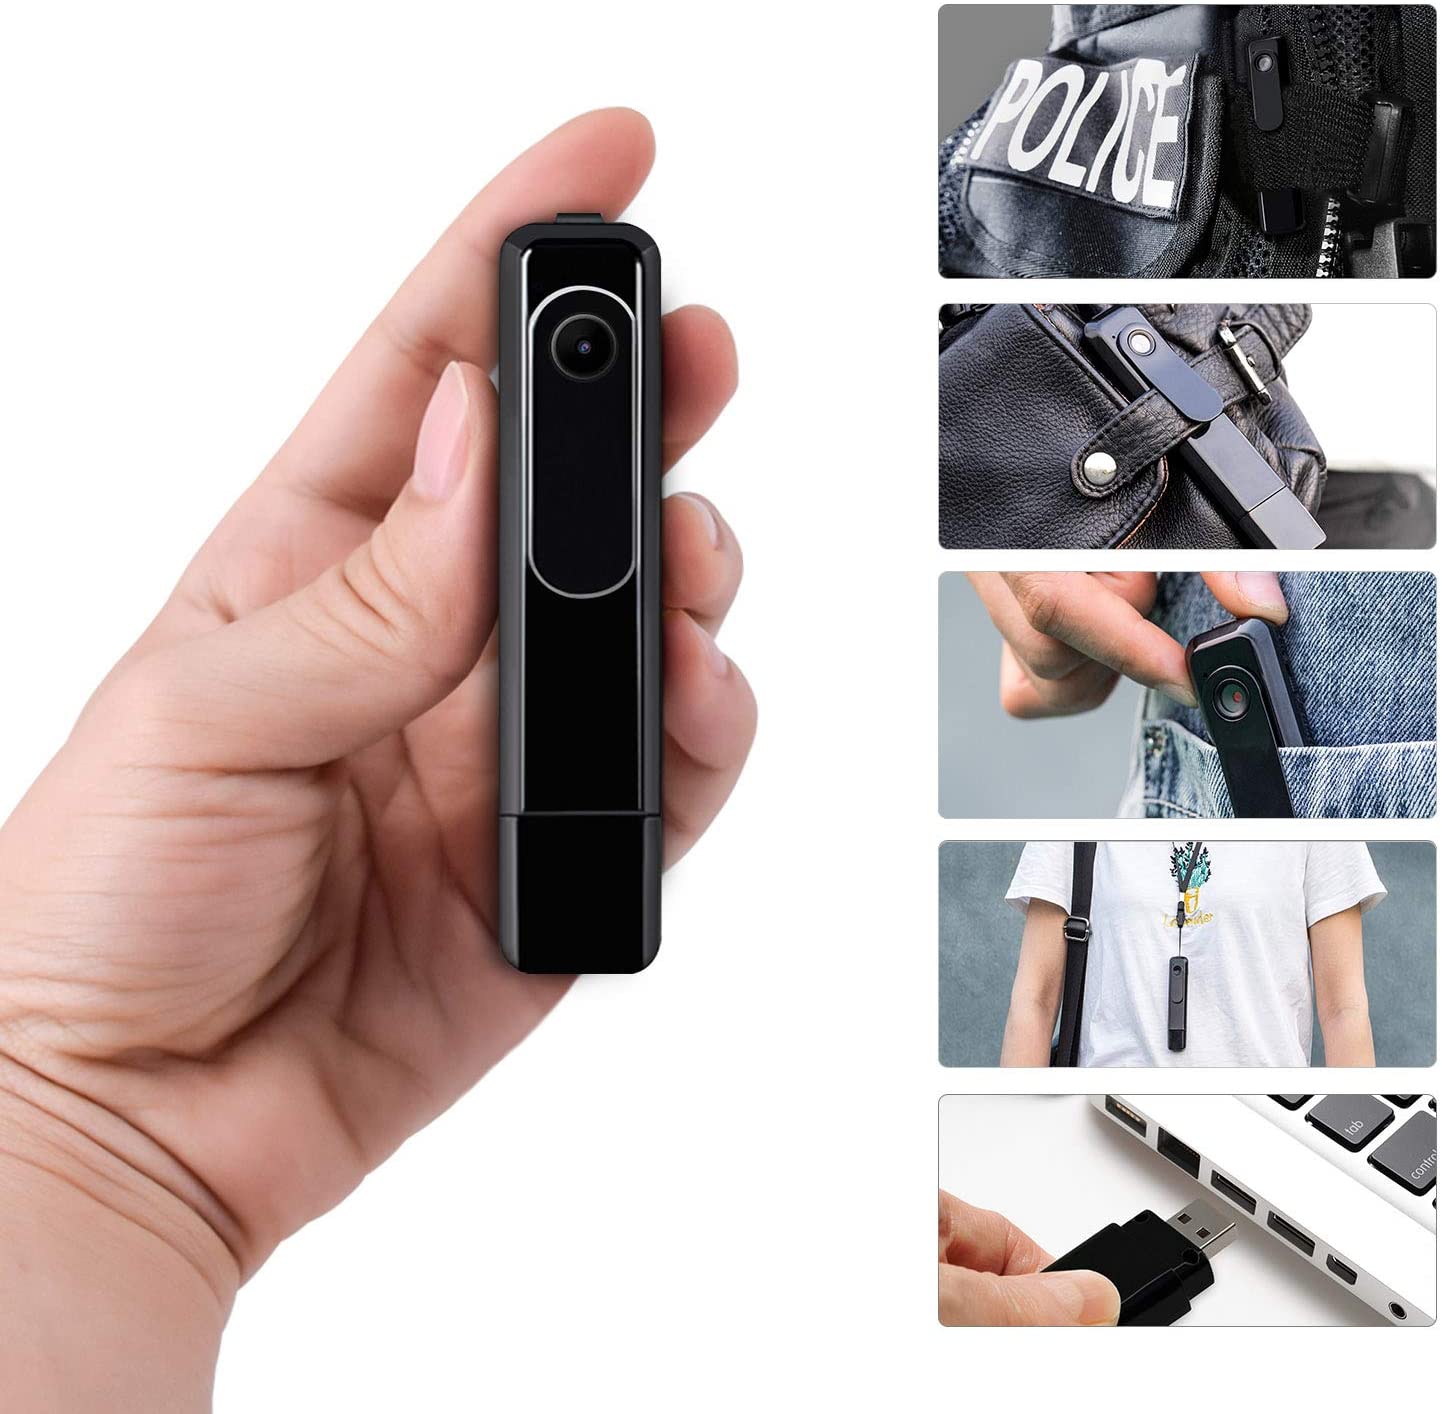 ehomful Body Camera HD 1080P Wearable Mini Hidden Spy Pen Camera $37.99 (REG $64.99)